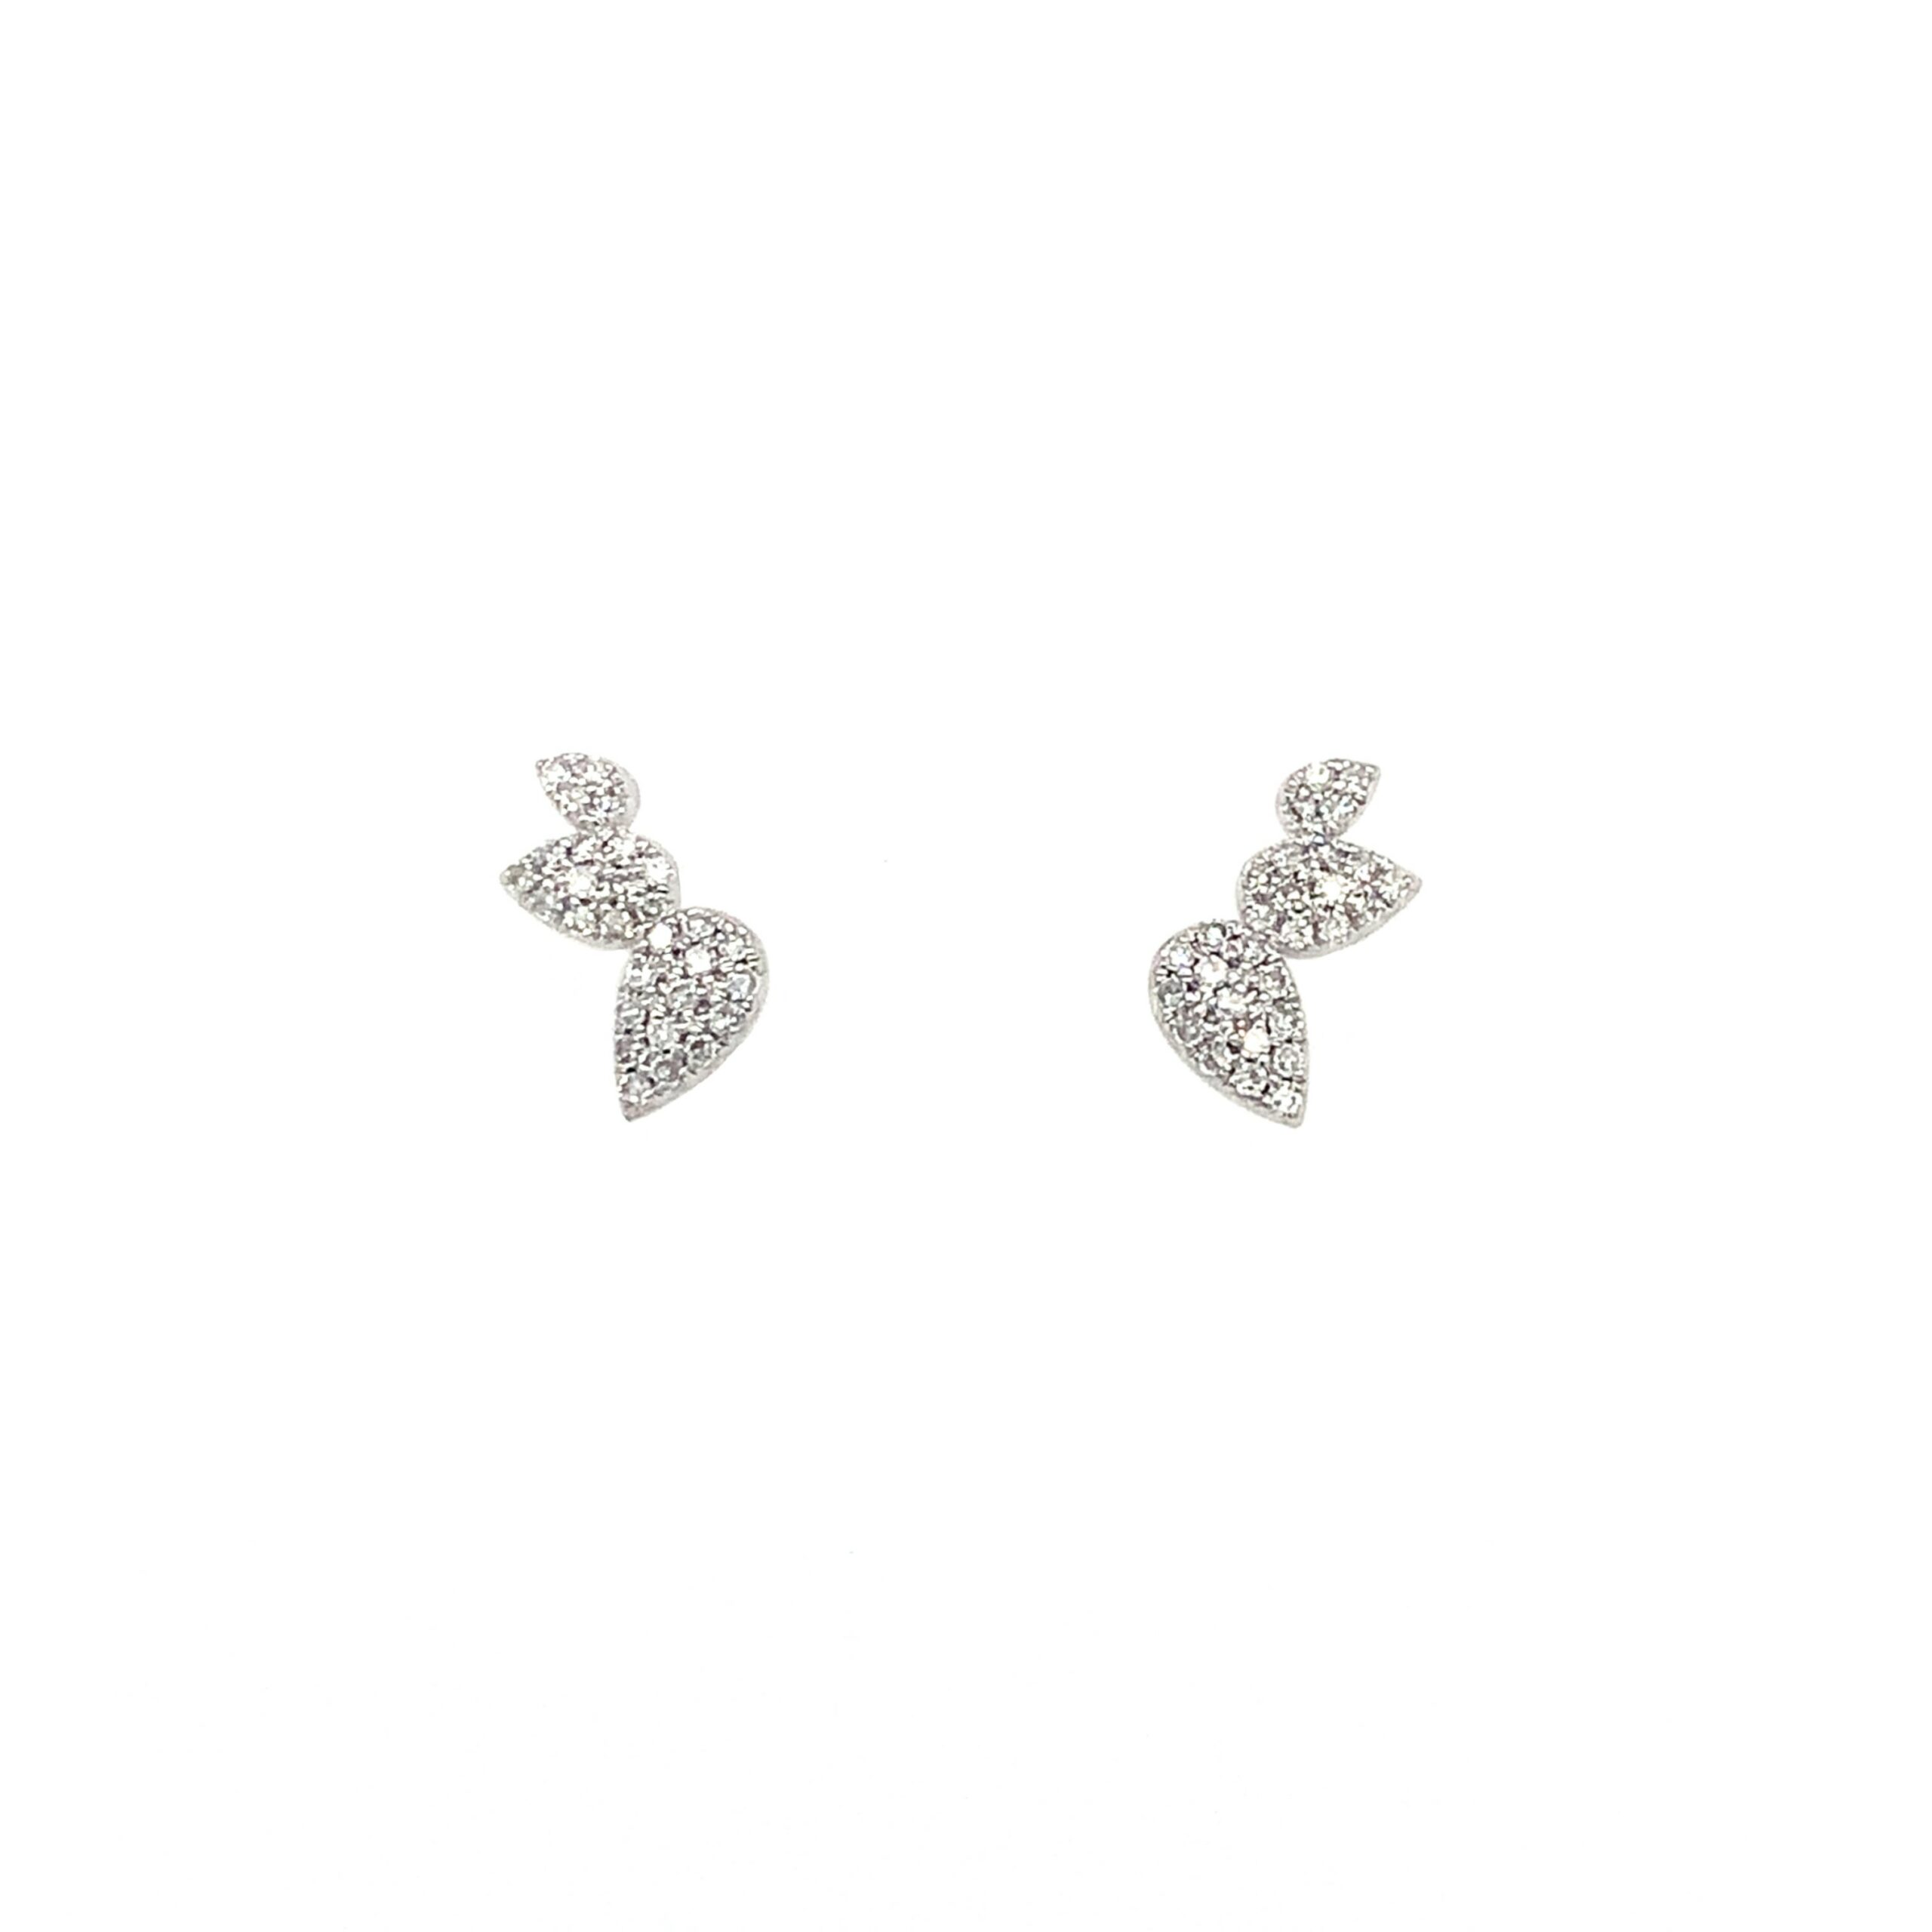 White Gold Diamond Pear Shaped Stud Earrings